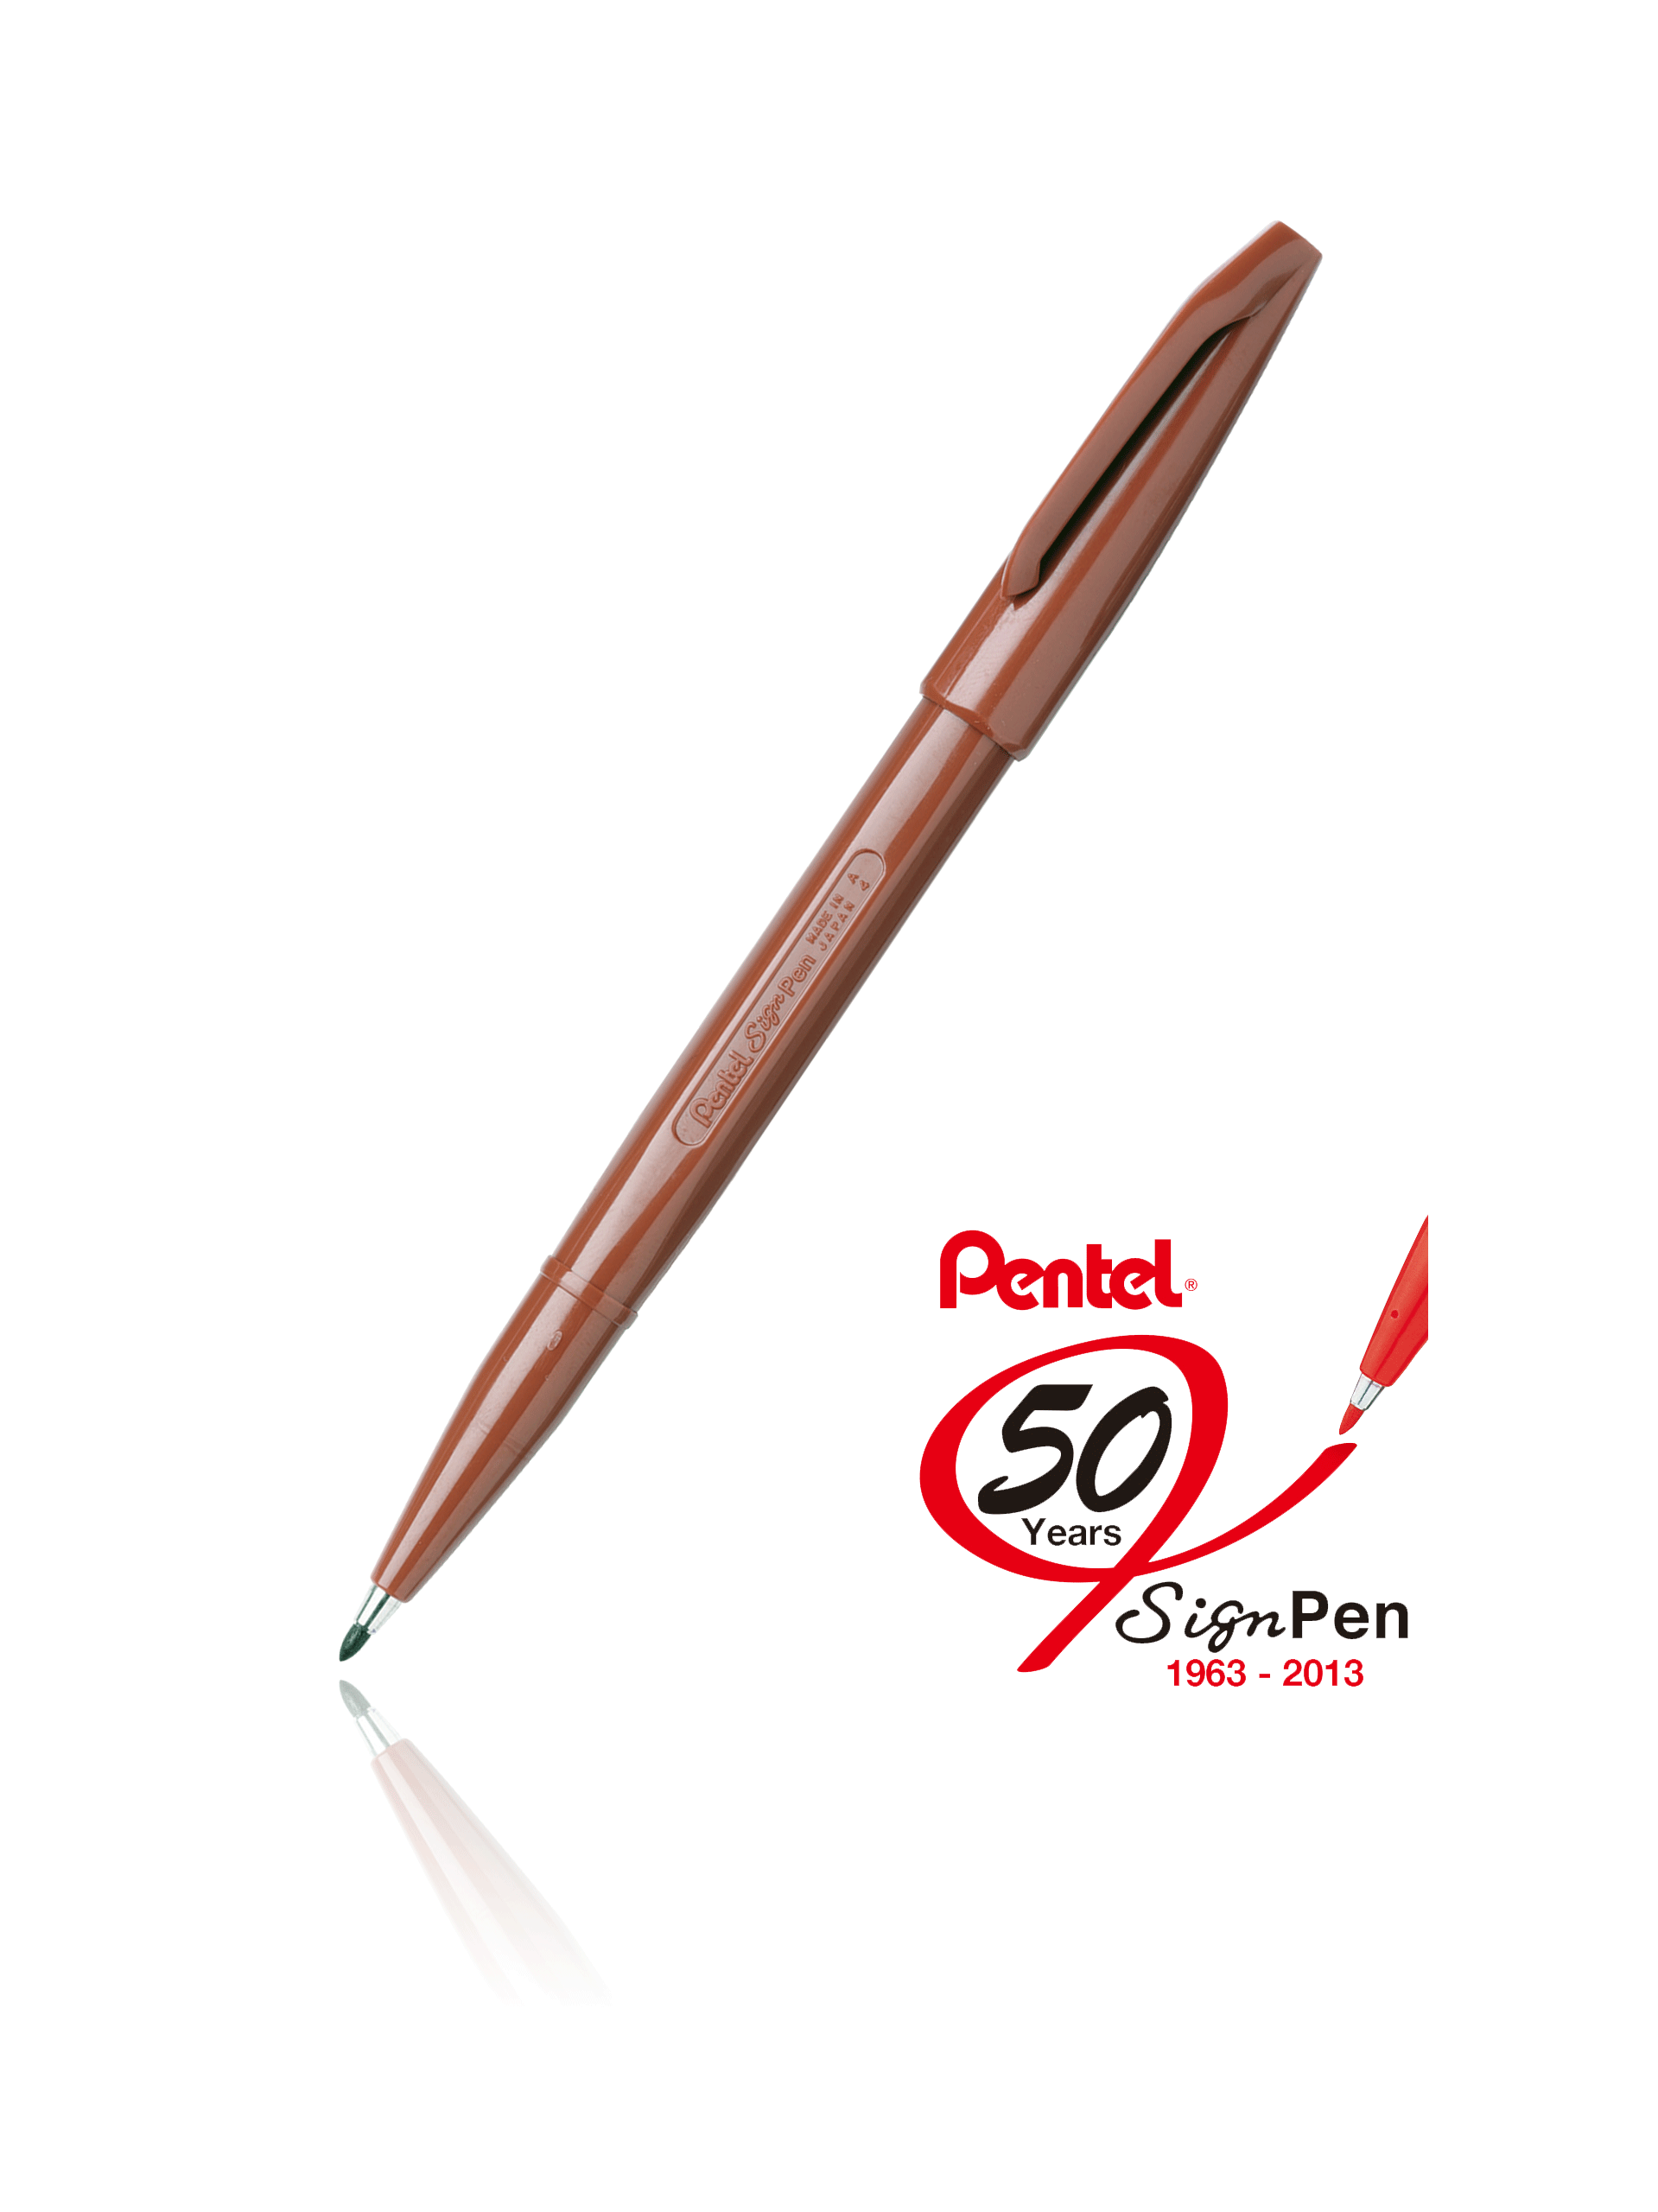 Pentel Arts Sign Fiber-Tipped Pen, Brown Ink, Pack of 12